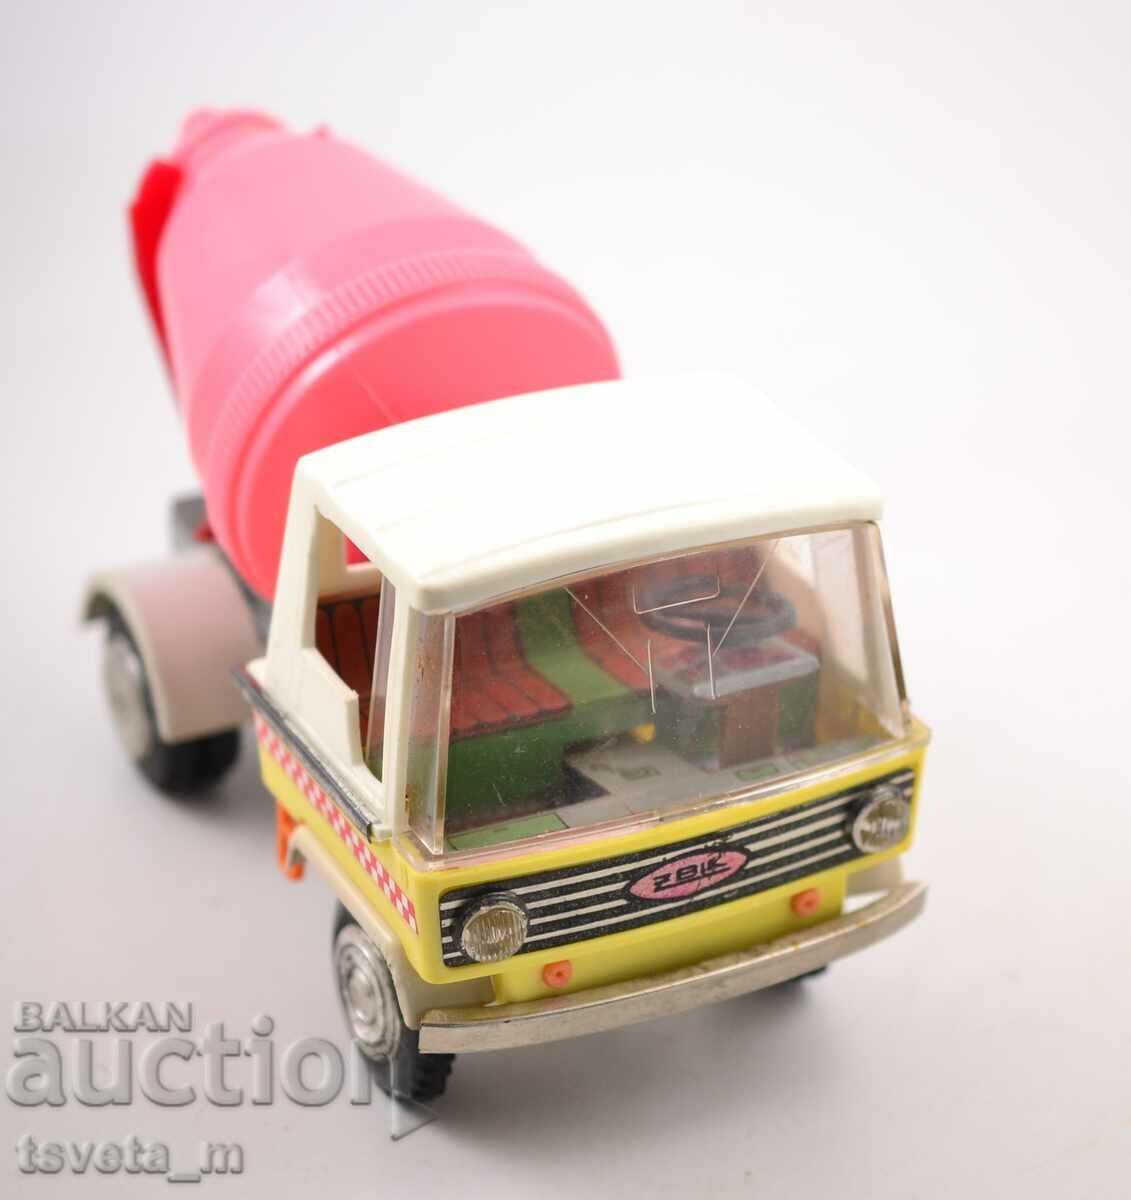 CONCRETE TRUCK truck, metal and plastic children's toys, social